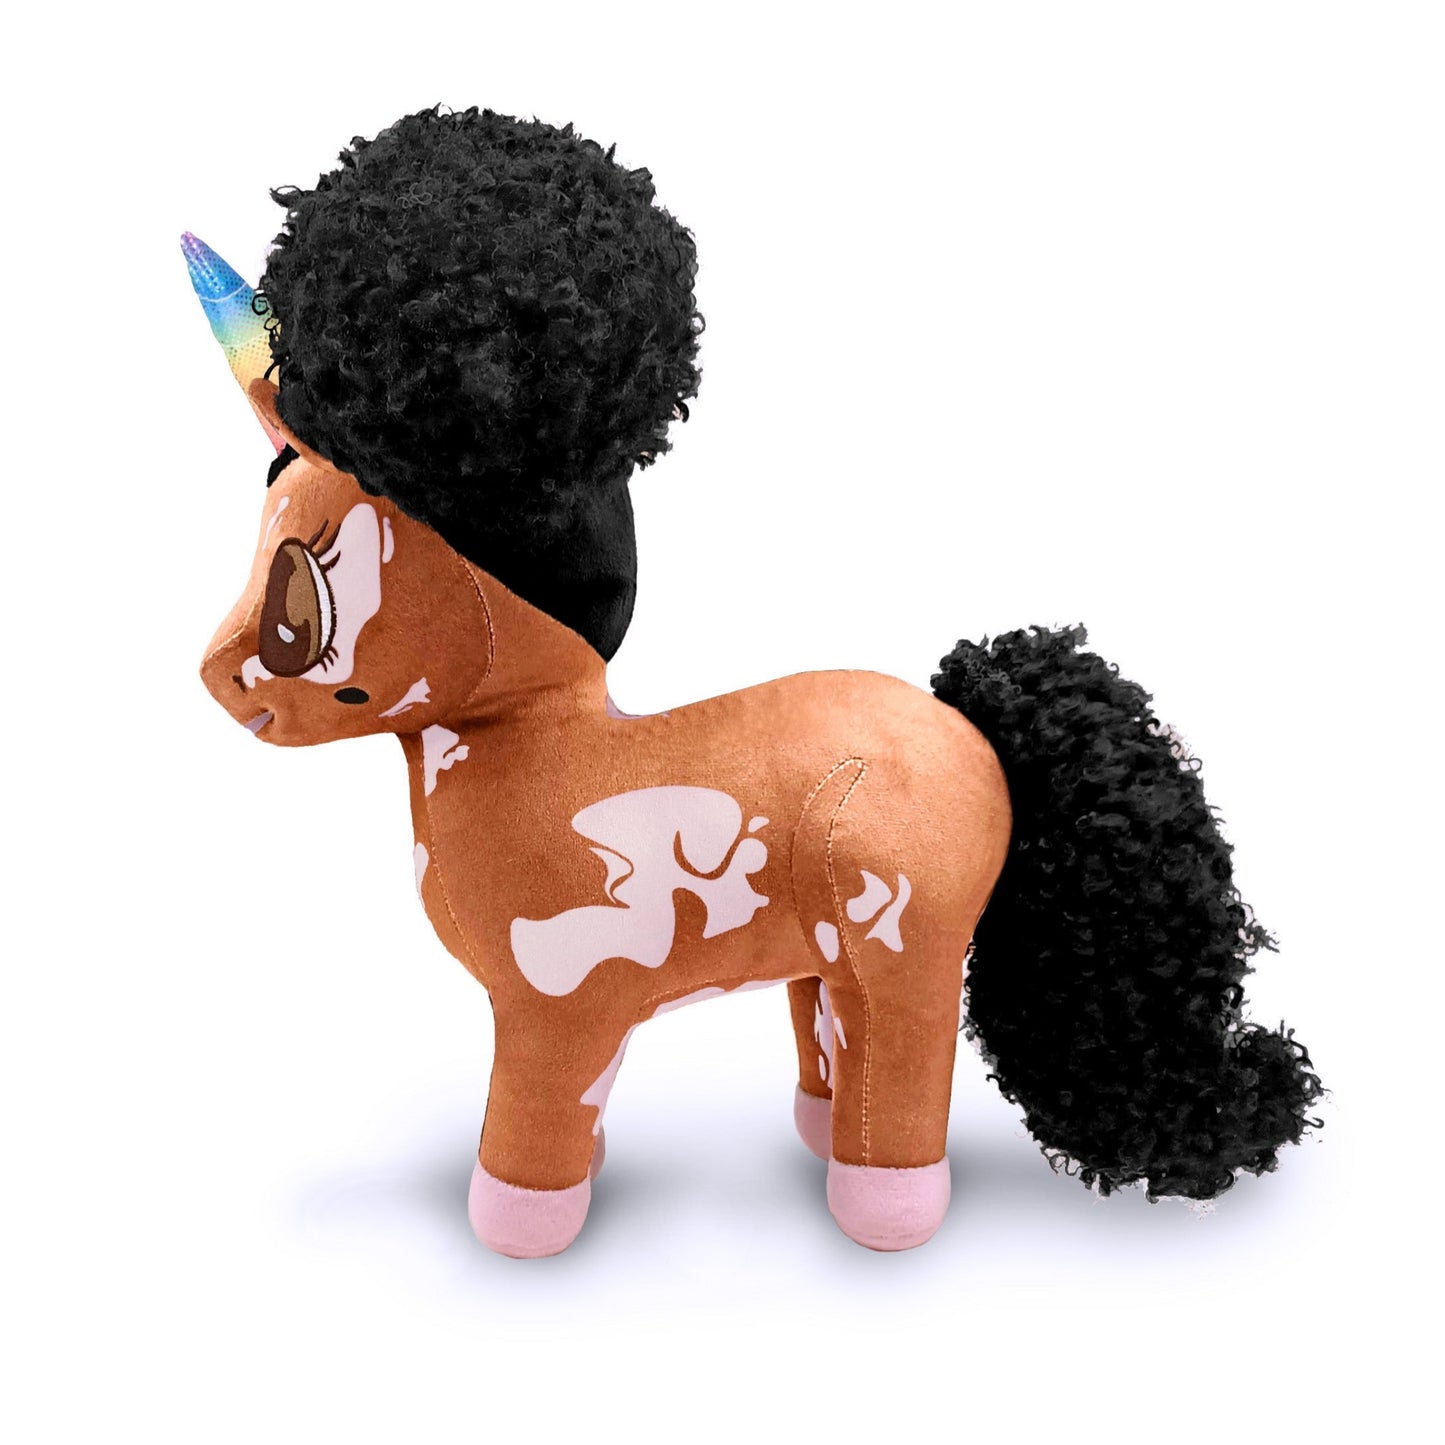 Malaysia, Vitiligo Unicorn Plush Toy with Afro Puffs - 15 inch